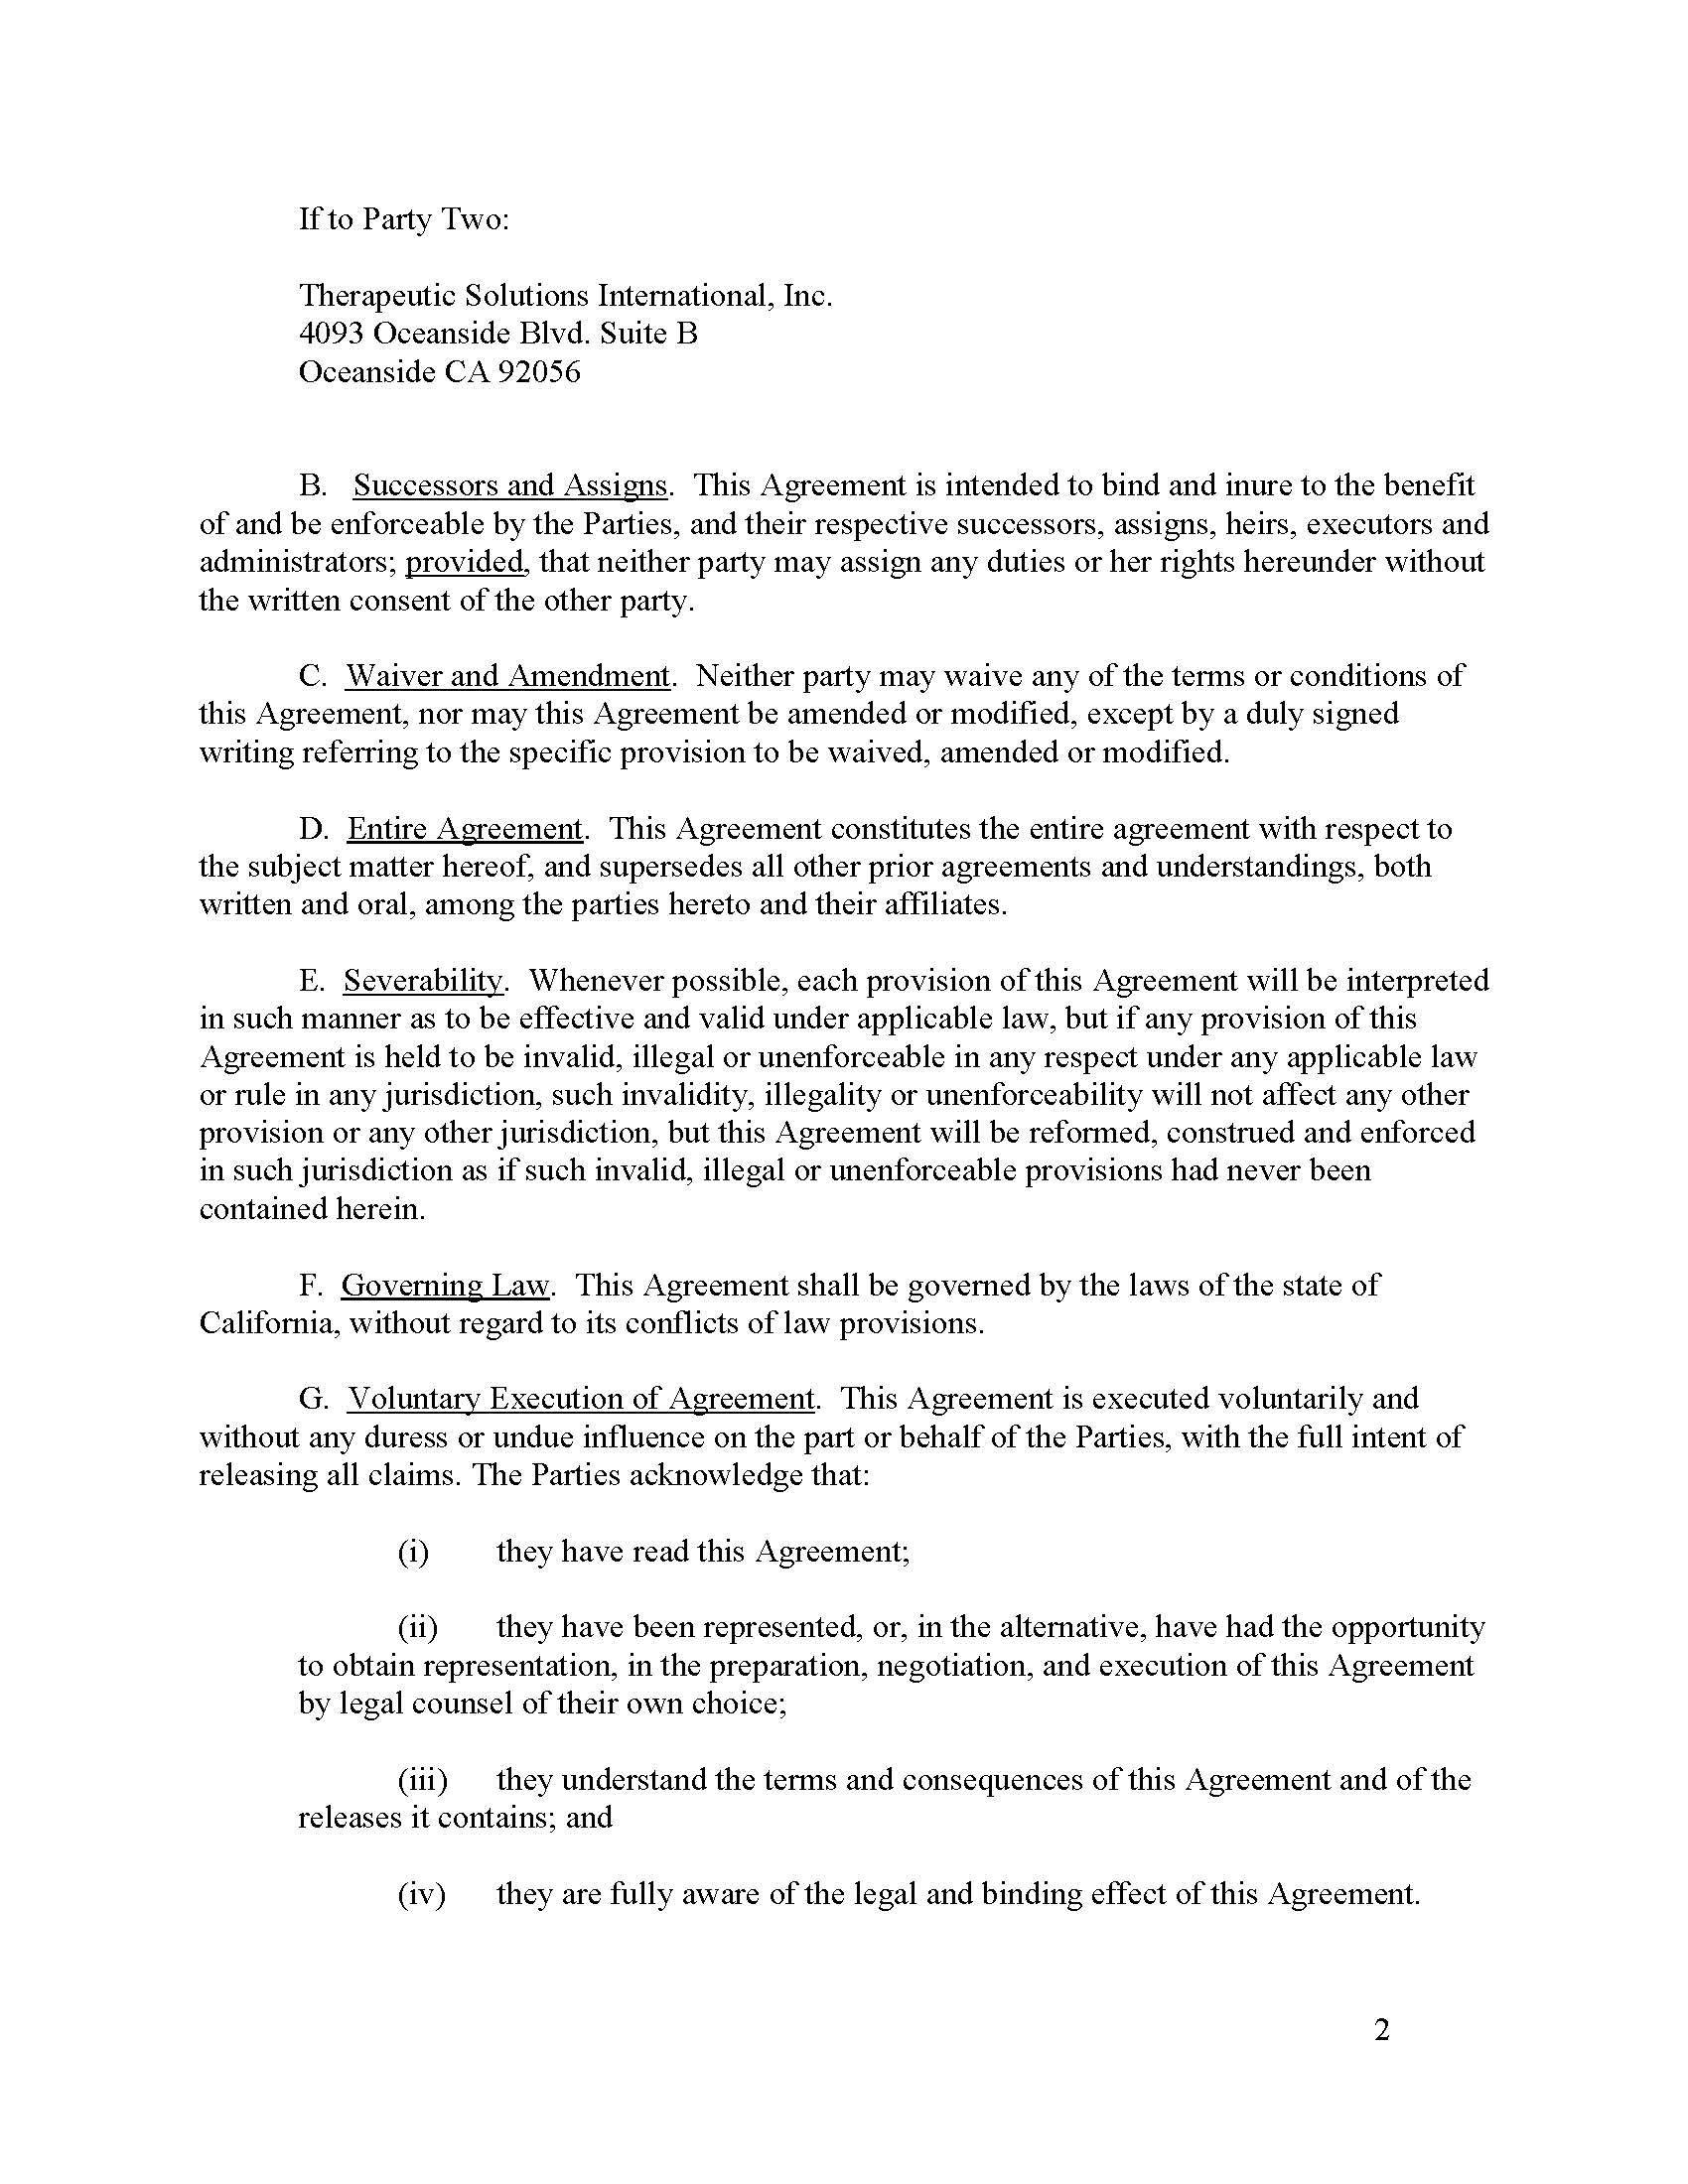 settlement-agreement-dixon_11-8-19_Page_2.jpg